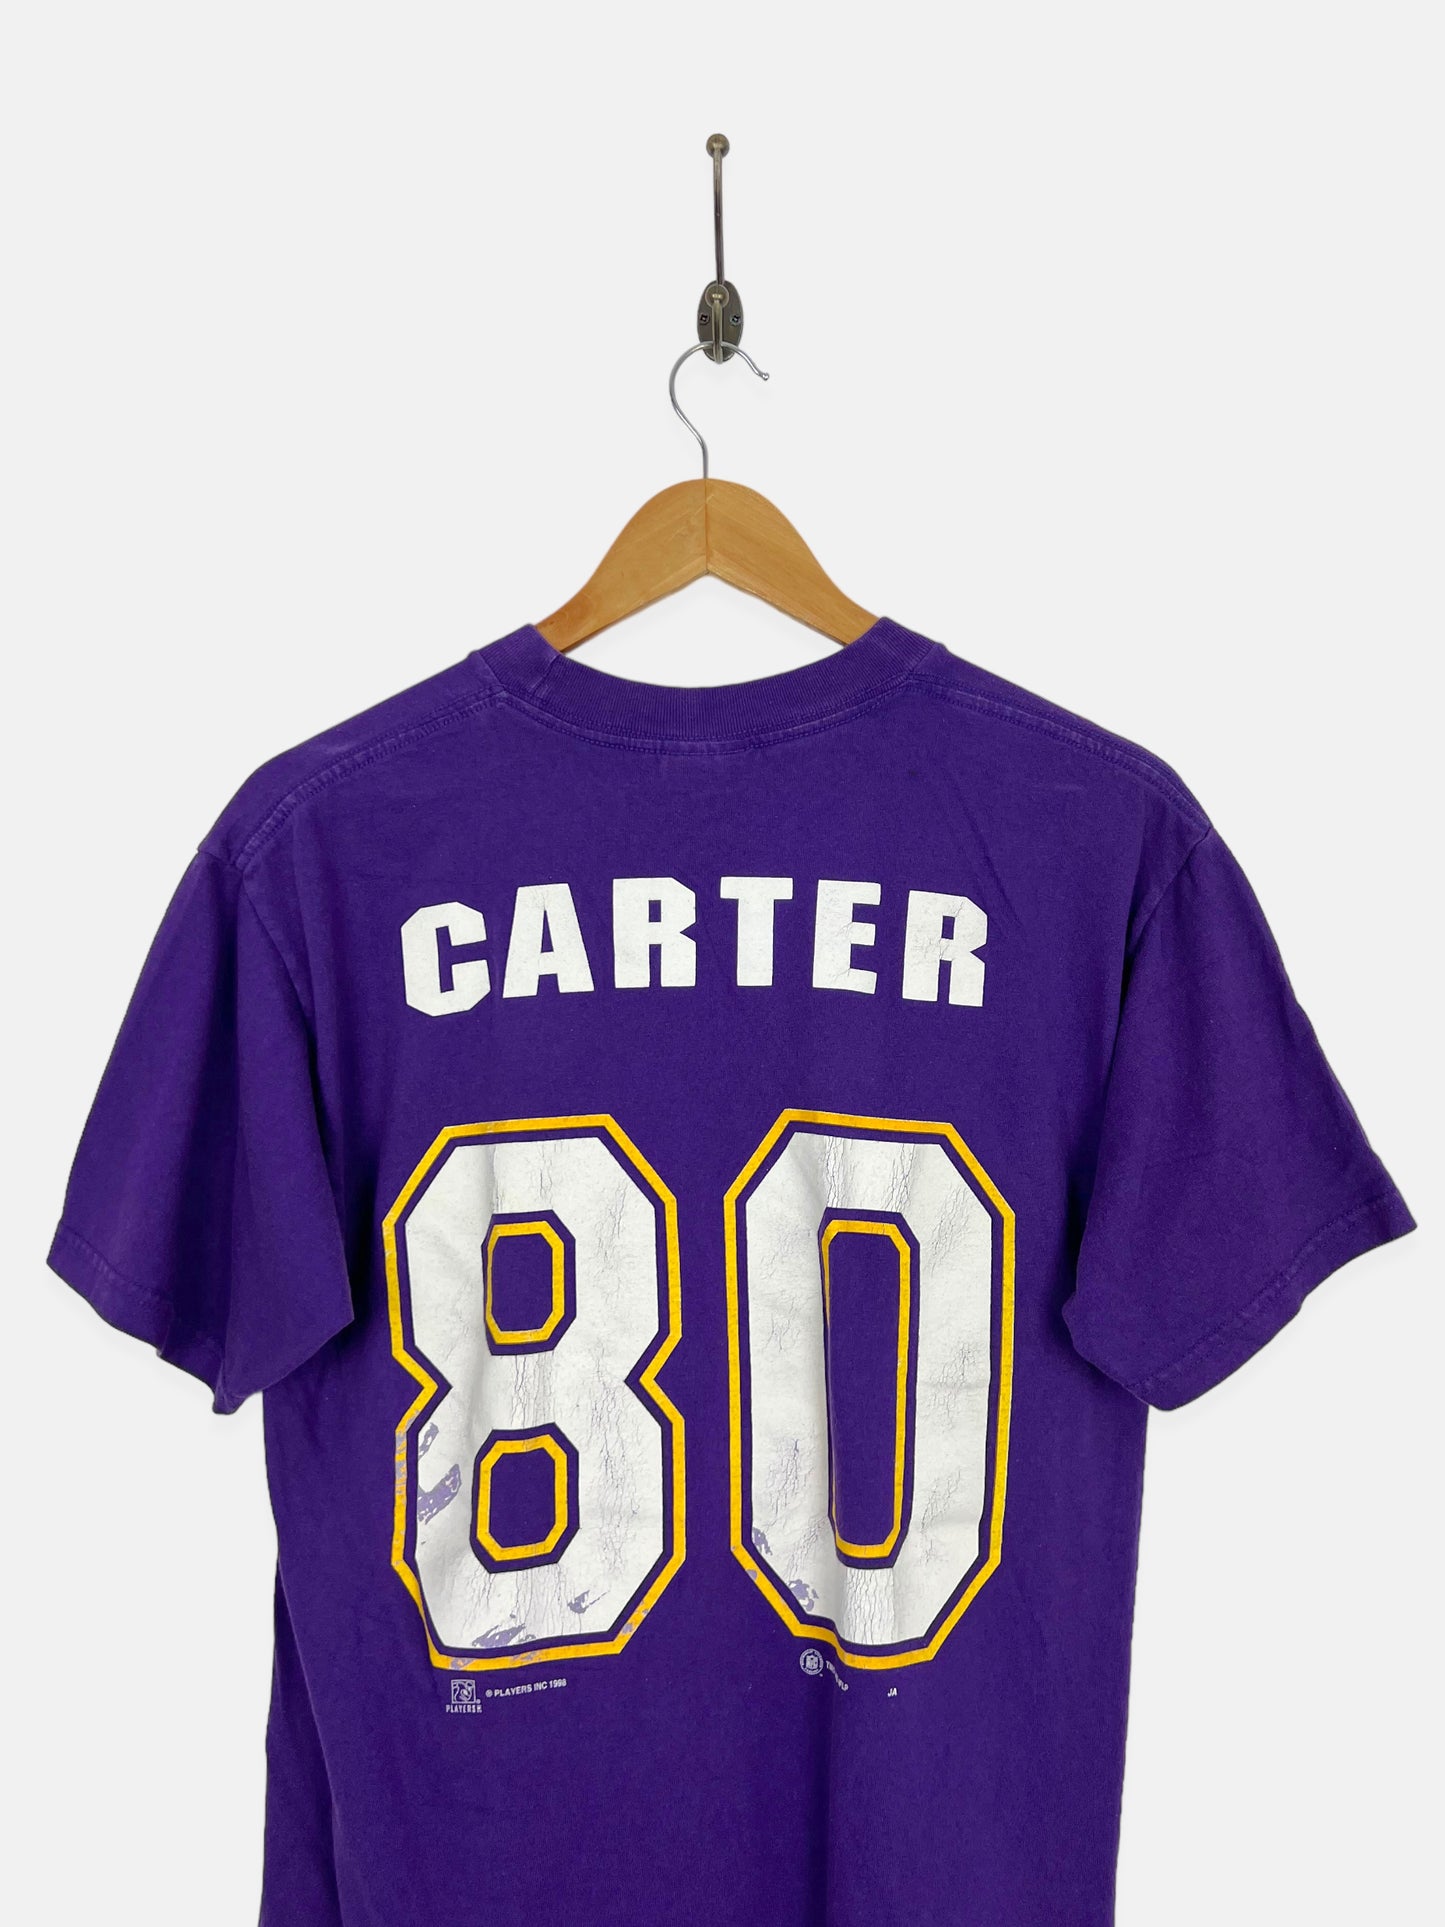 90's Minnesota Vikings NFL USA Made Vintage T-Shirt Size 8-10